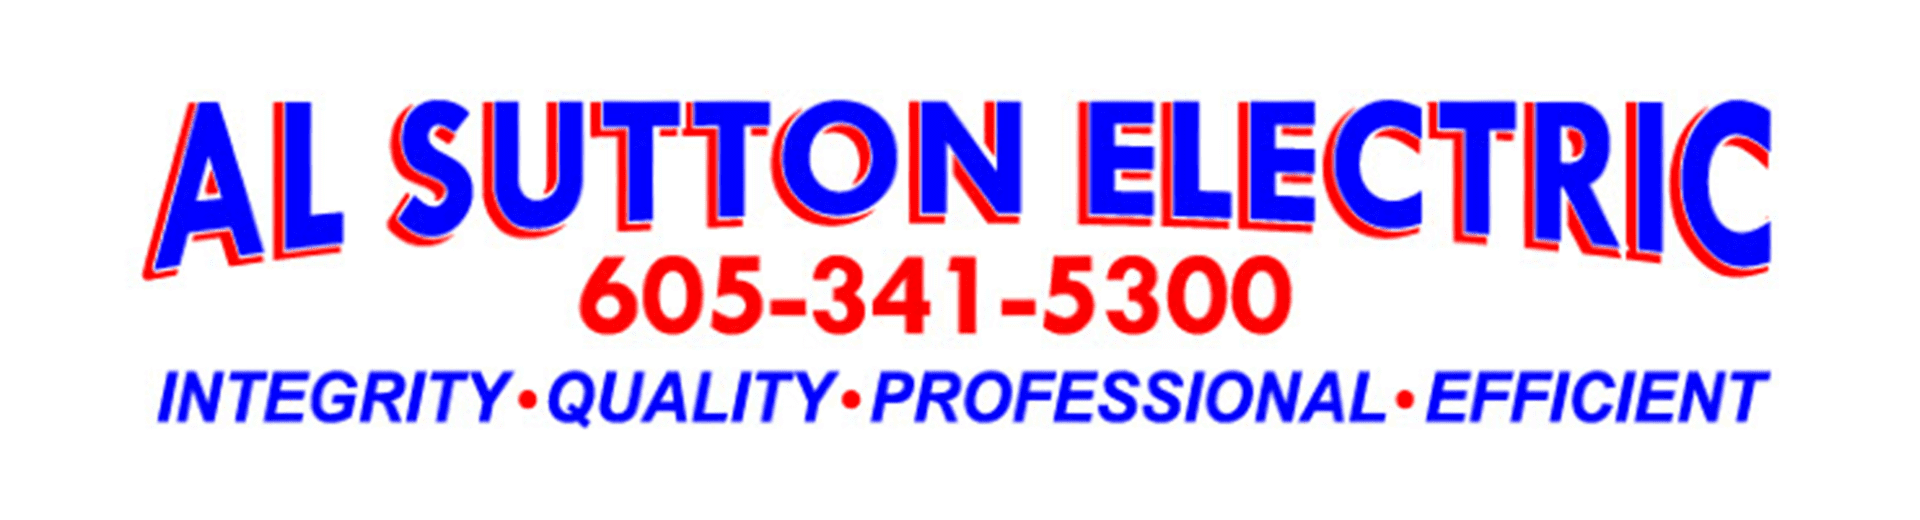 Al Sutton Electric Inc